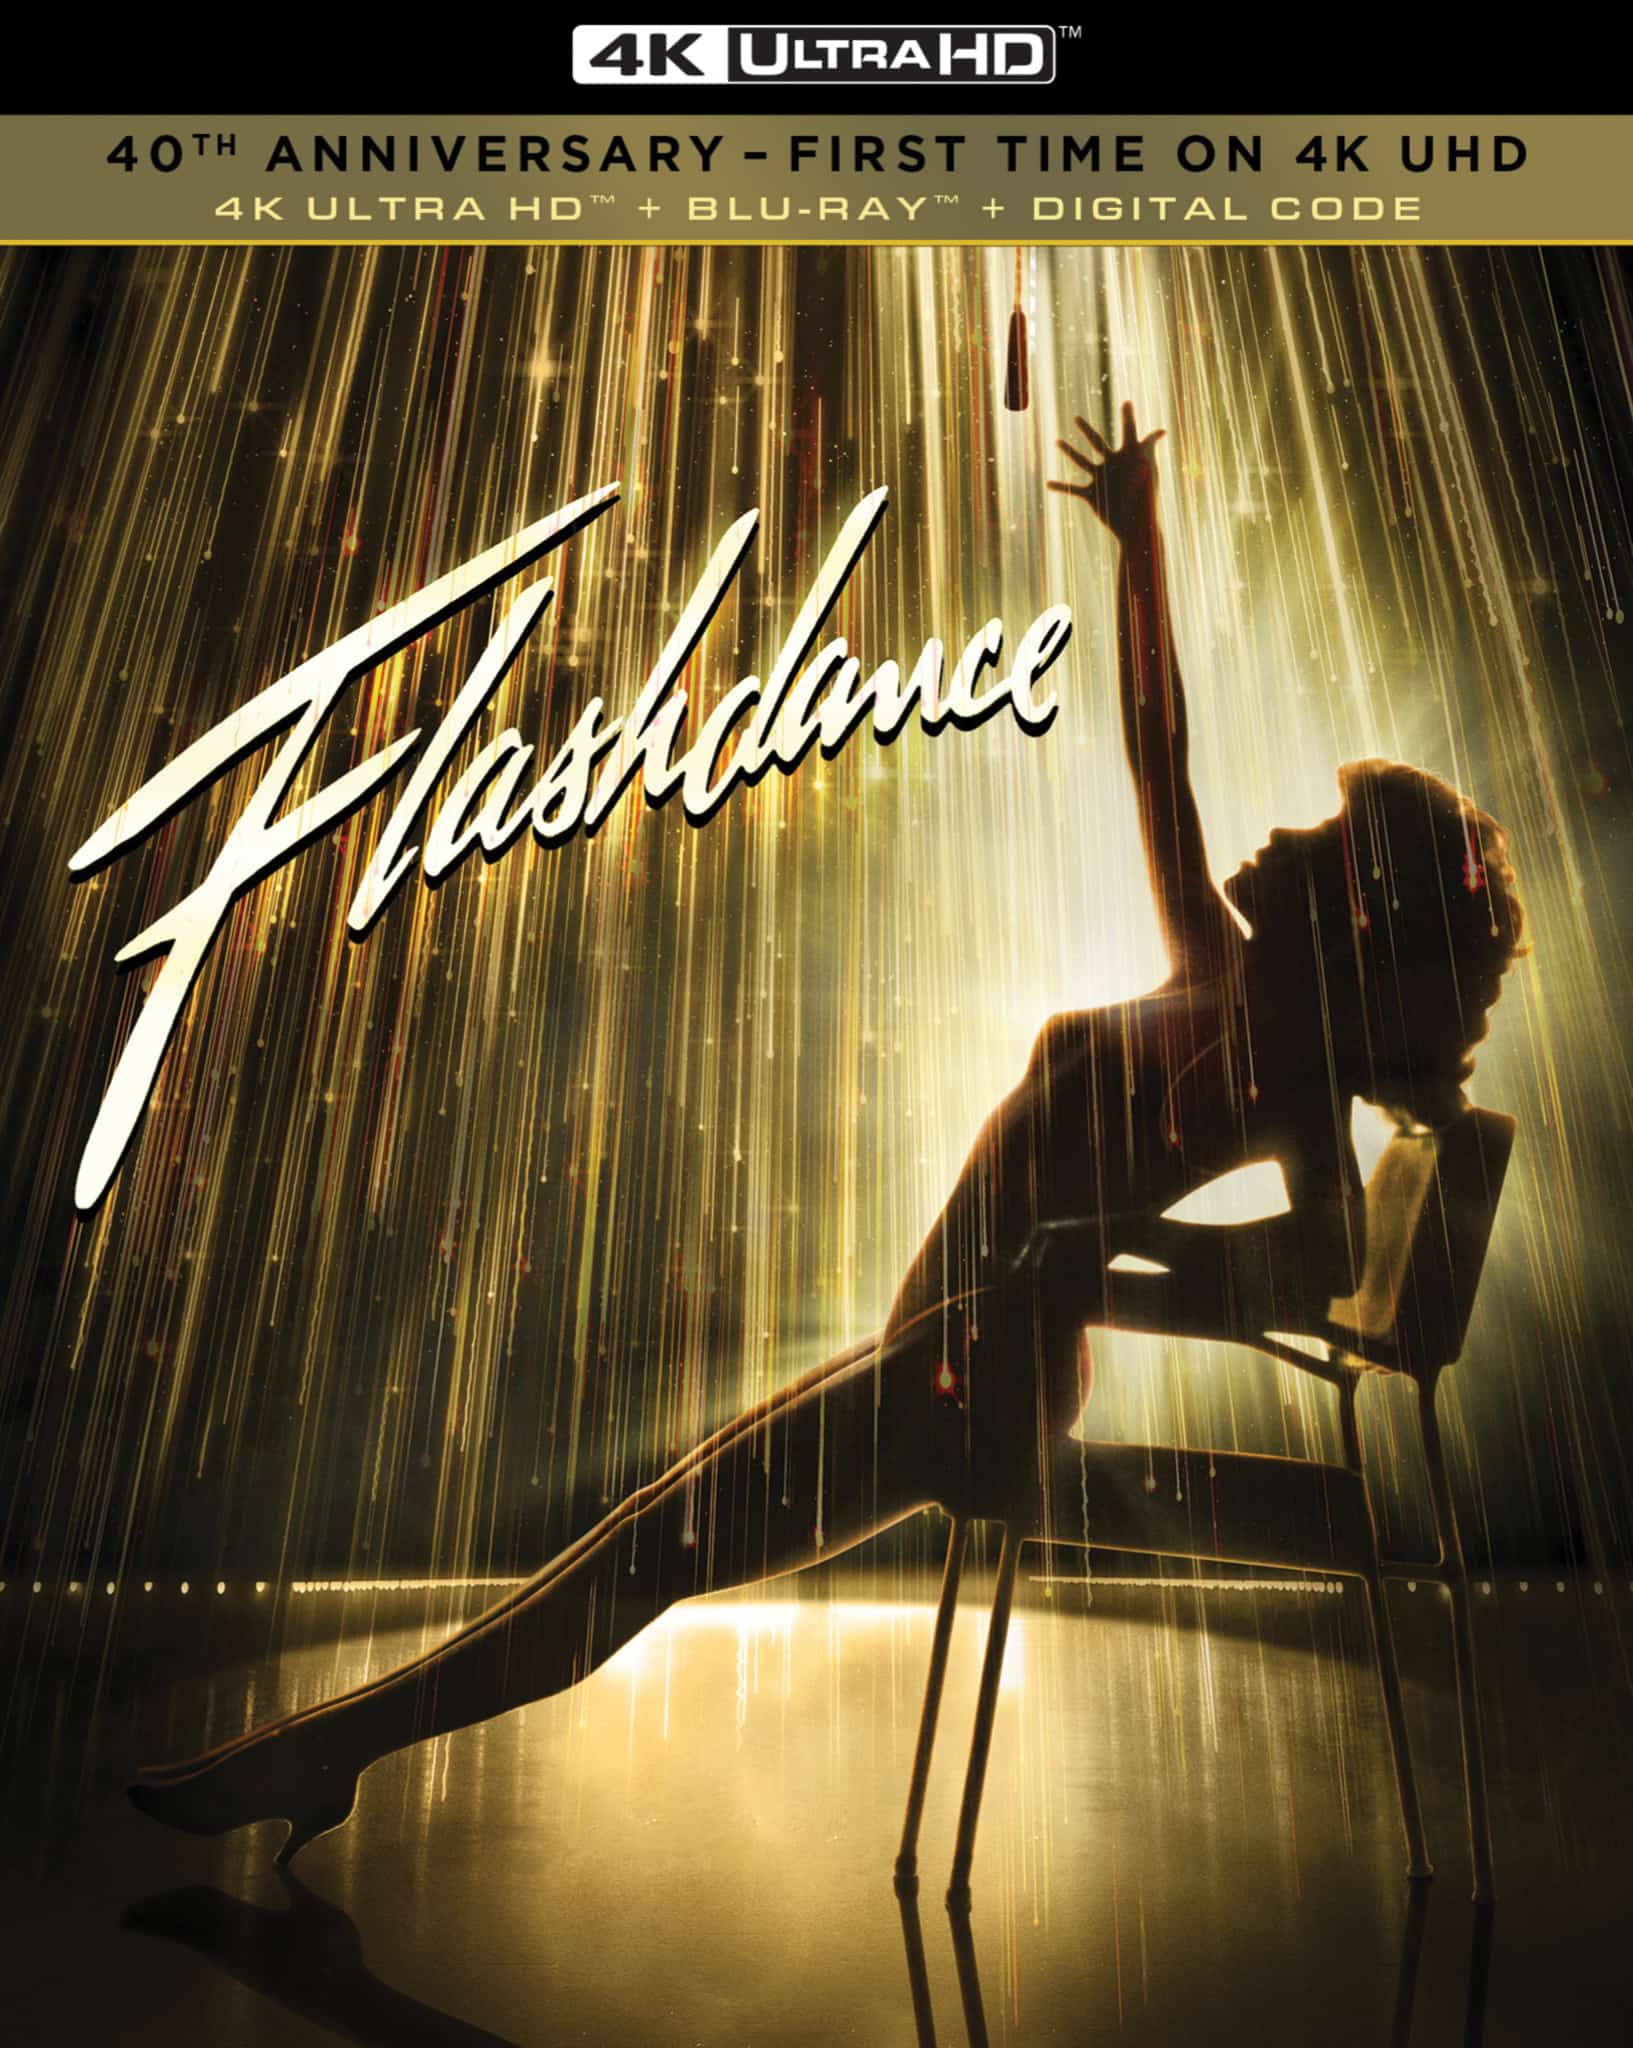 Flashdance celebrates its 40th Anniversary in 4K UHD on April 11th 18